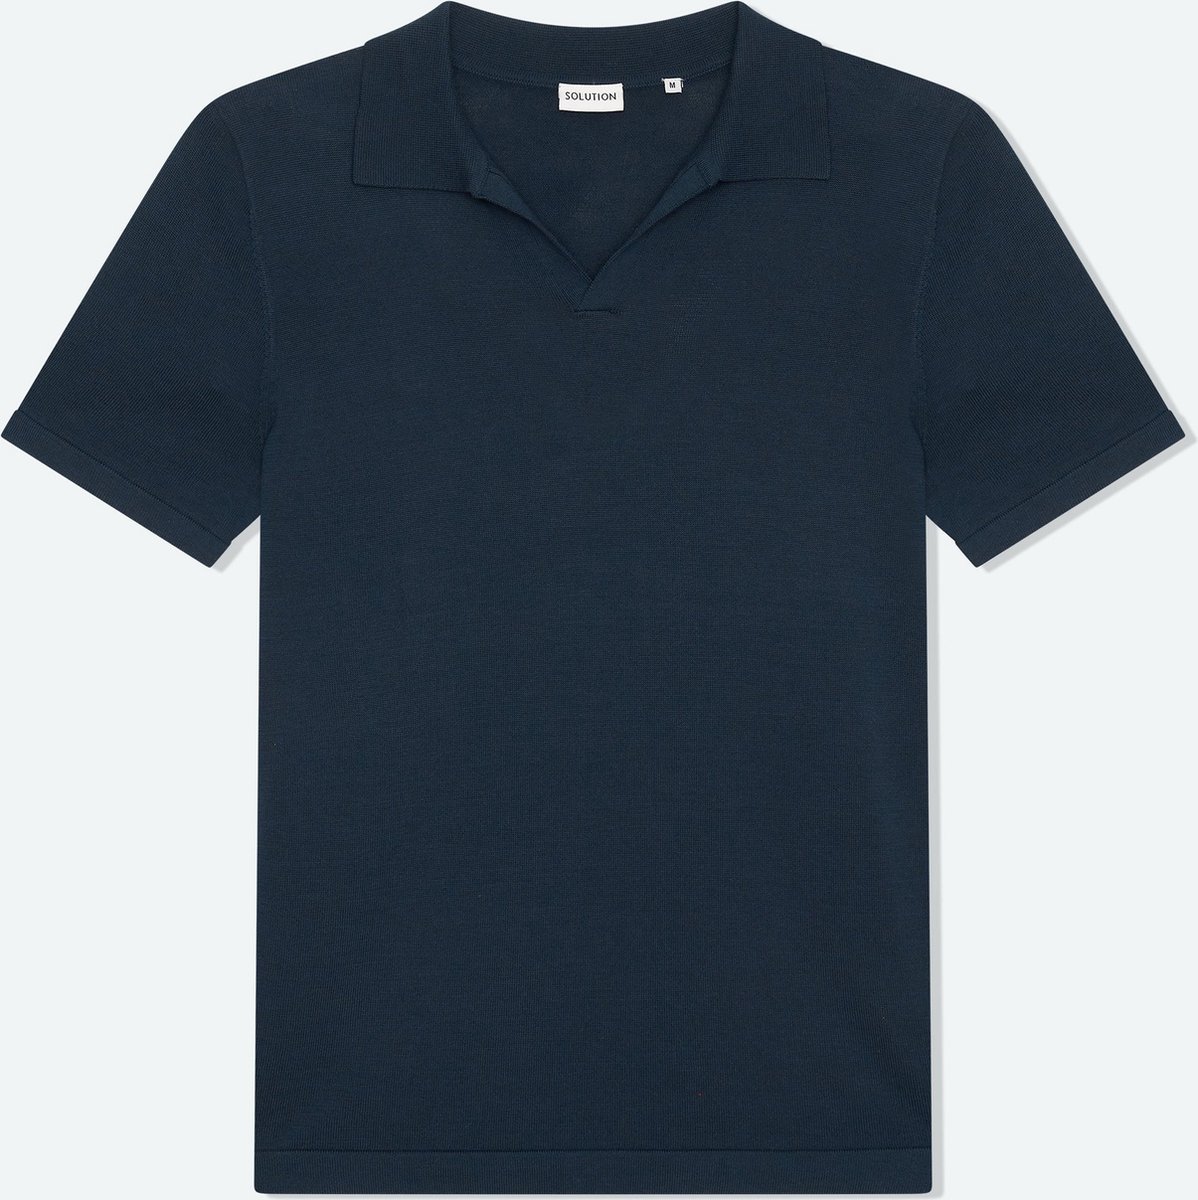 Solution Clothing Victor - Casual Poloshirt - Regular Fit - Knoopsluiting - Volwassenen - Heren - Mannen - Navy - M - M - Solution Clothing